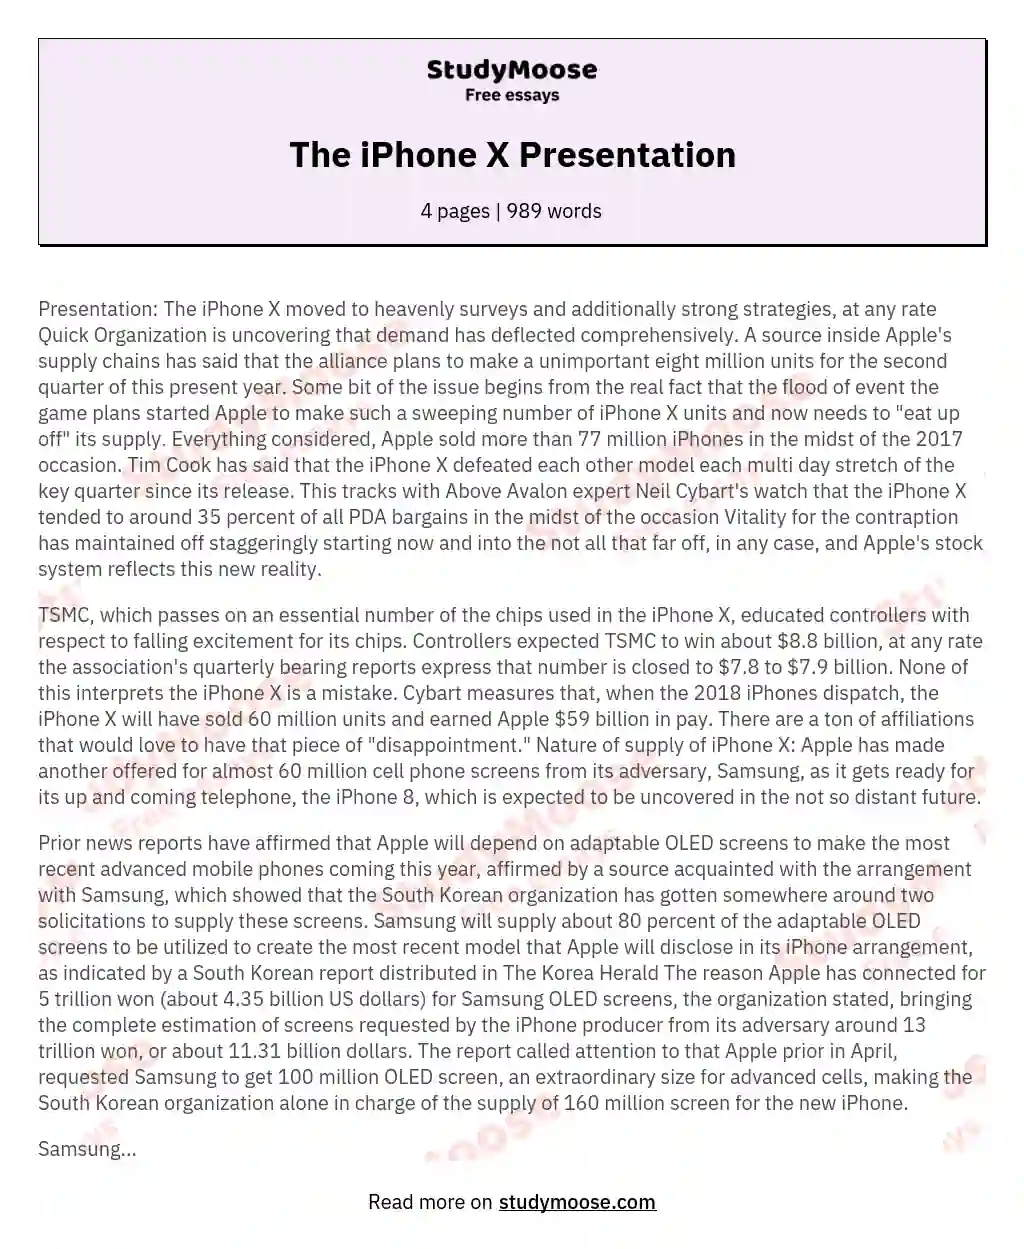 The iPhone X Presentation essay